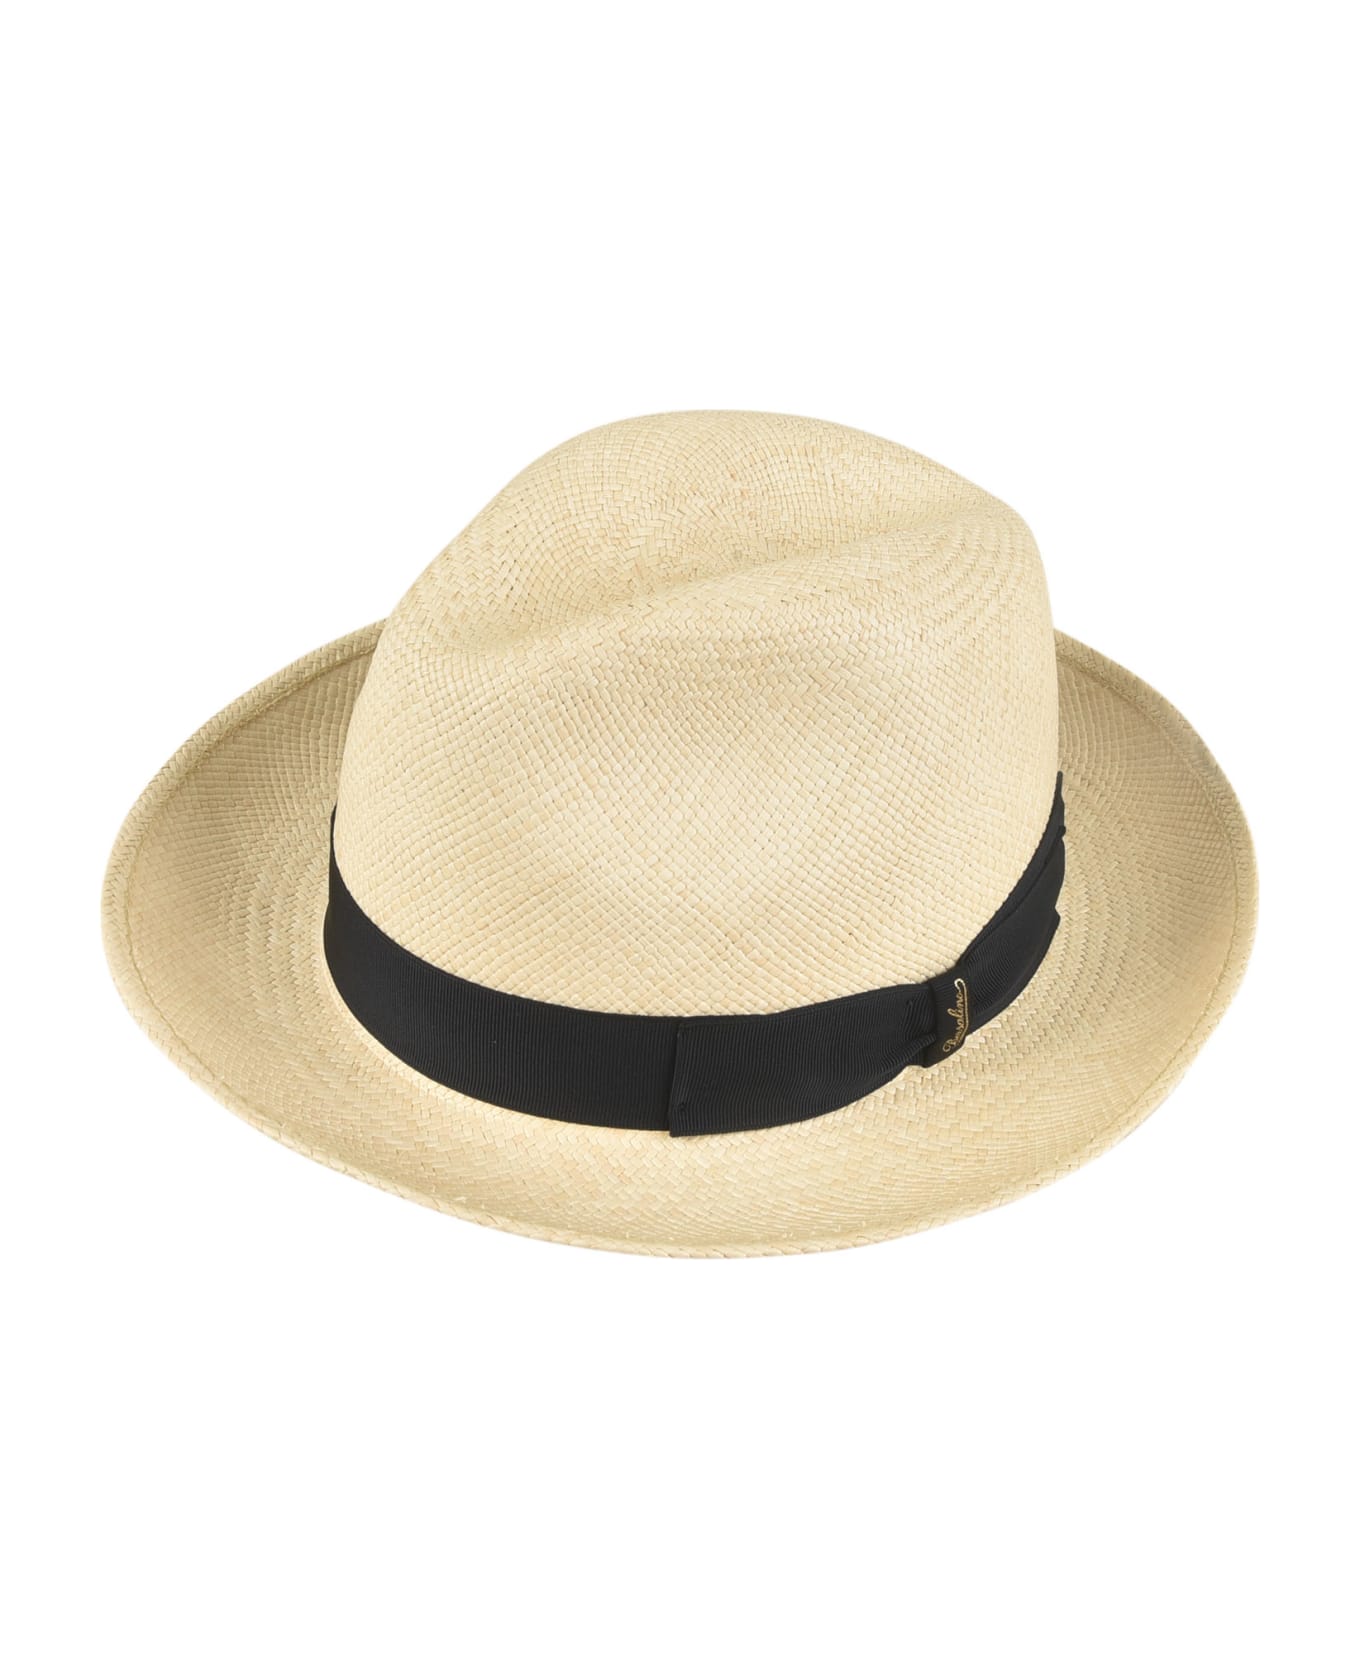 Borsalino Woven Round Hat - 7141 帽子